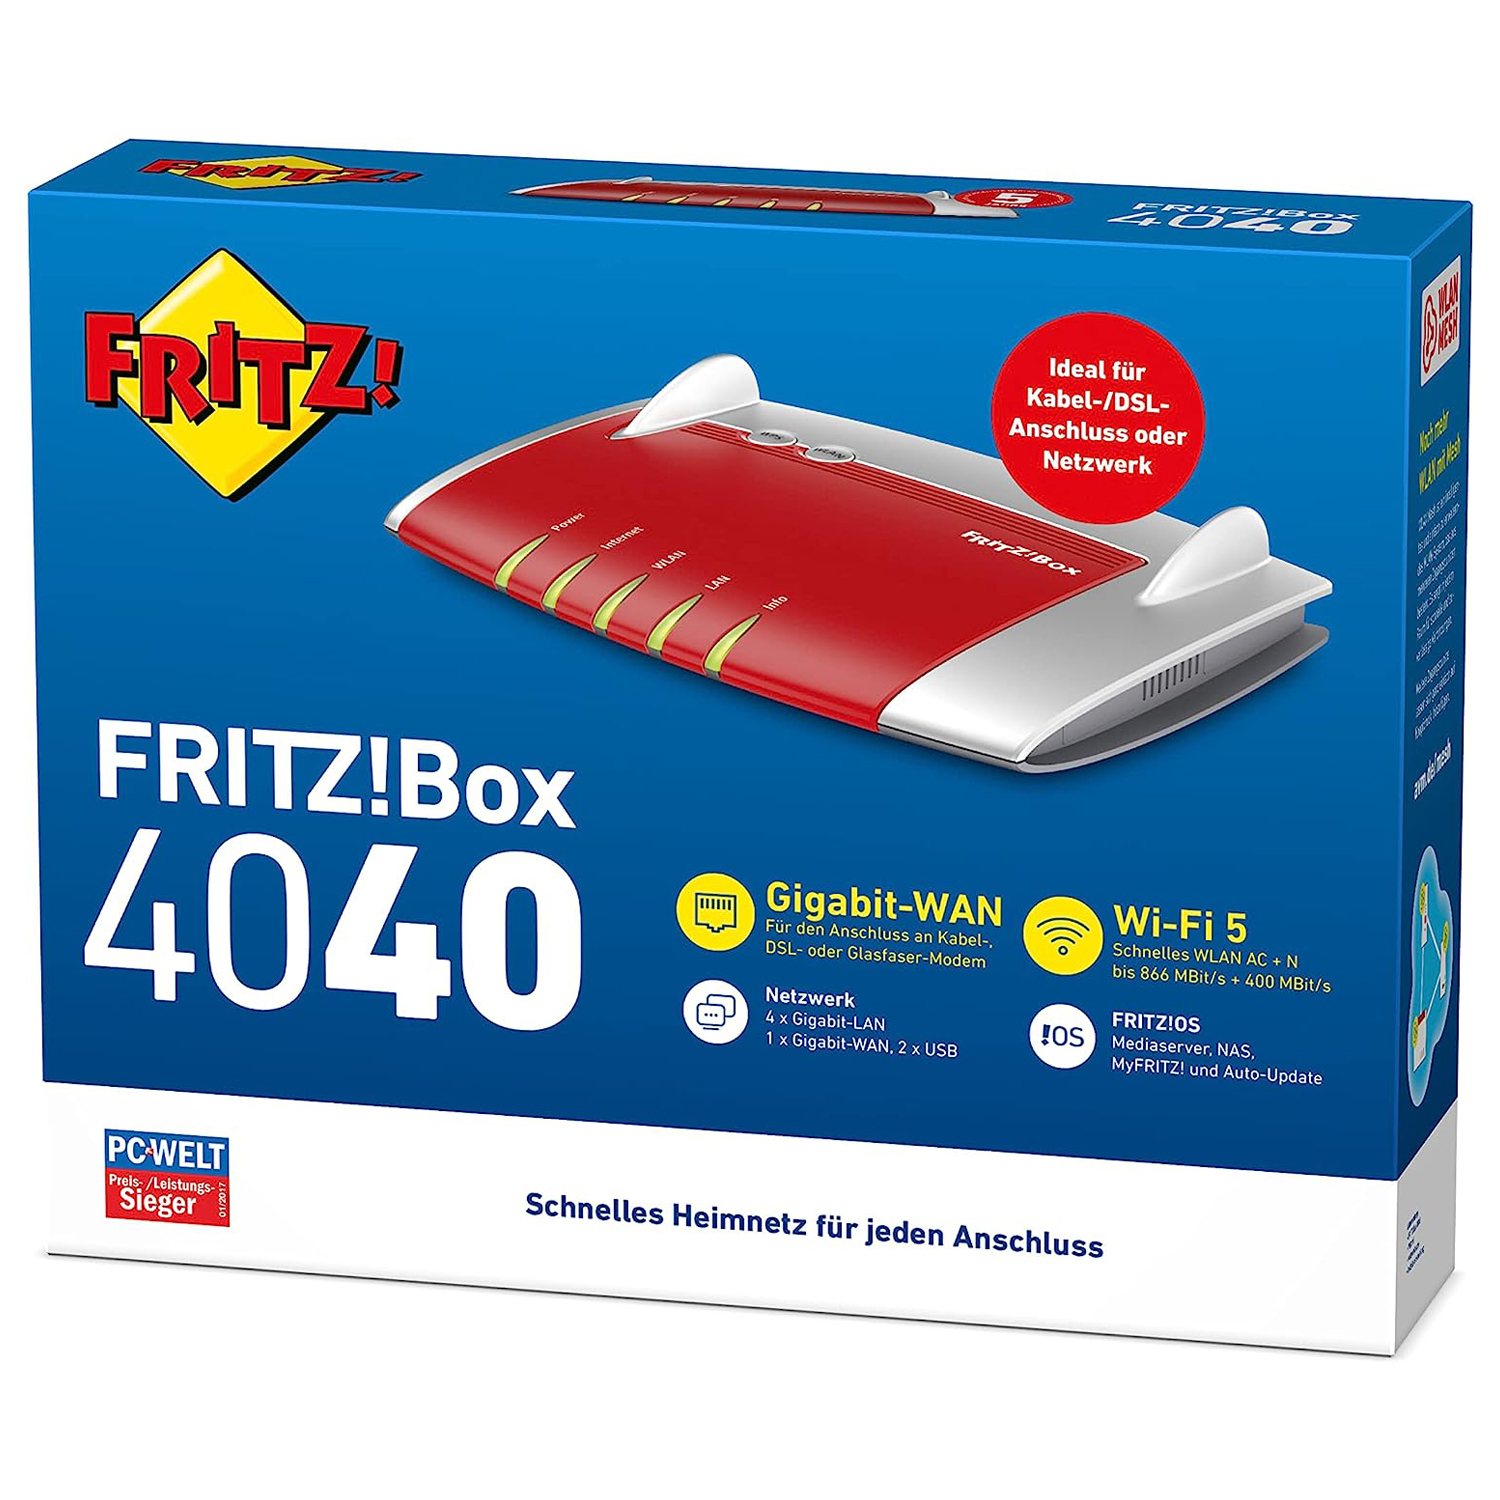 Fritz!Box 4040 – Fleidl EDV